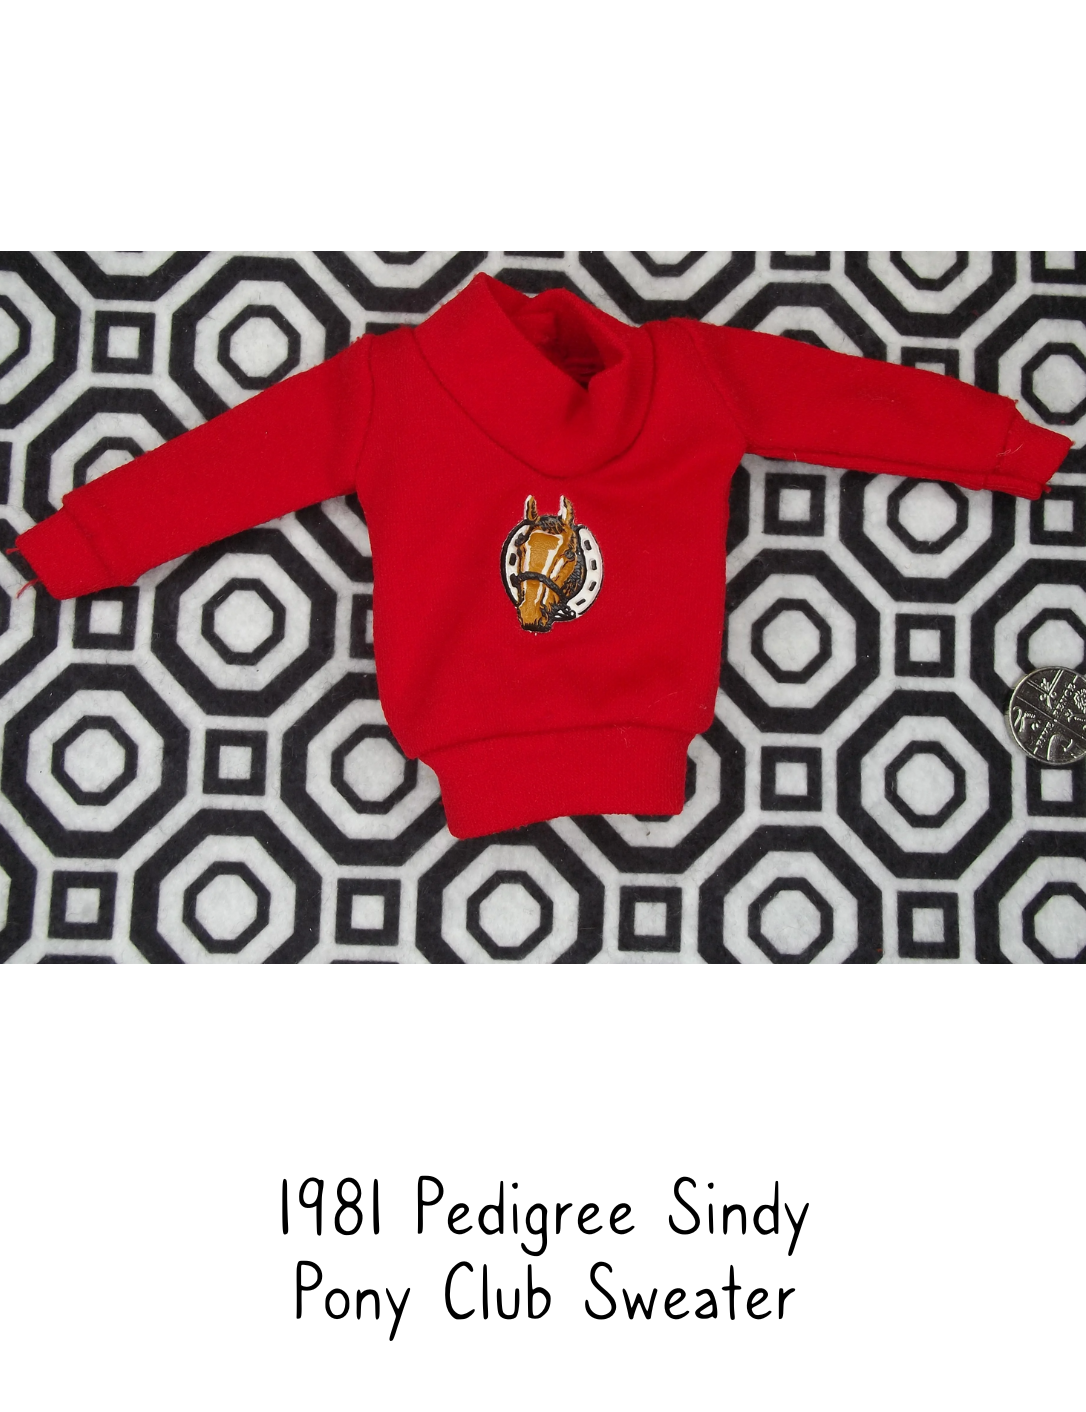 1981 Pedigree Sindy Pony Club Fashion Doll Red Sweater